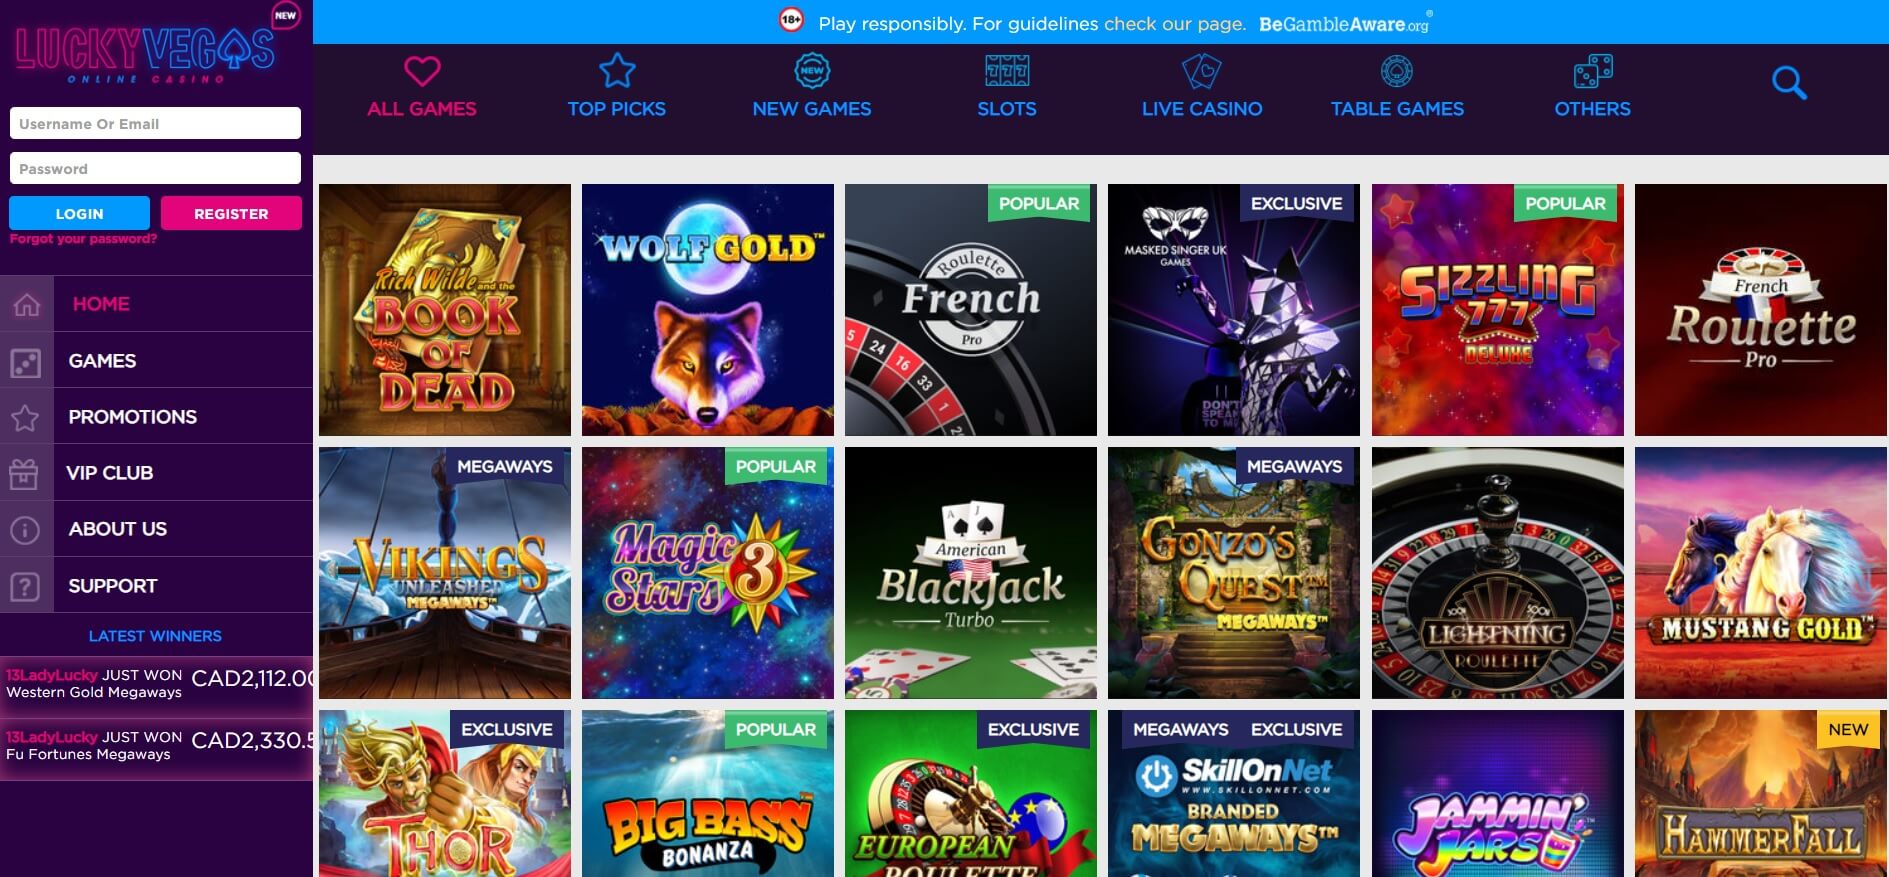 lucky vegas casino games and slots screenshot